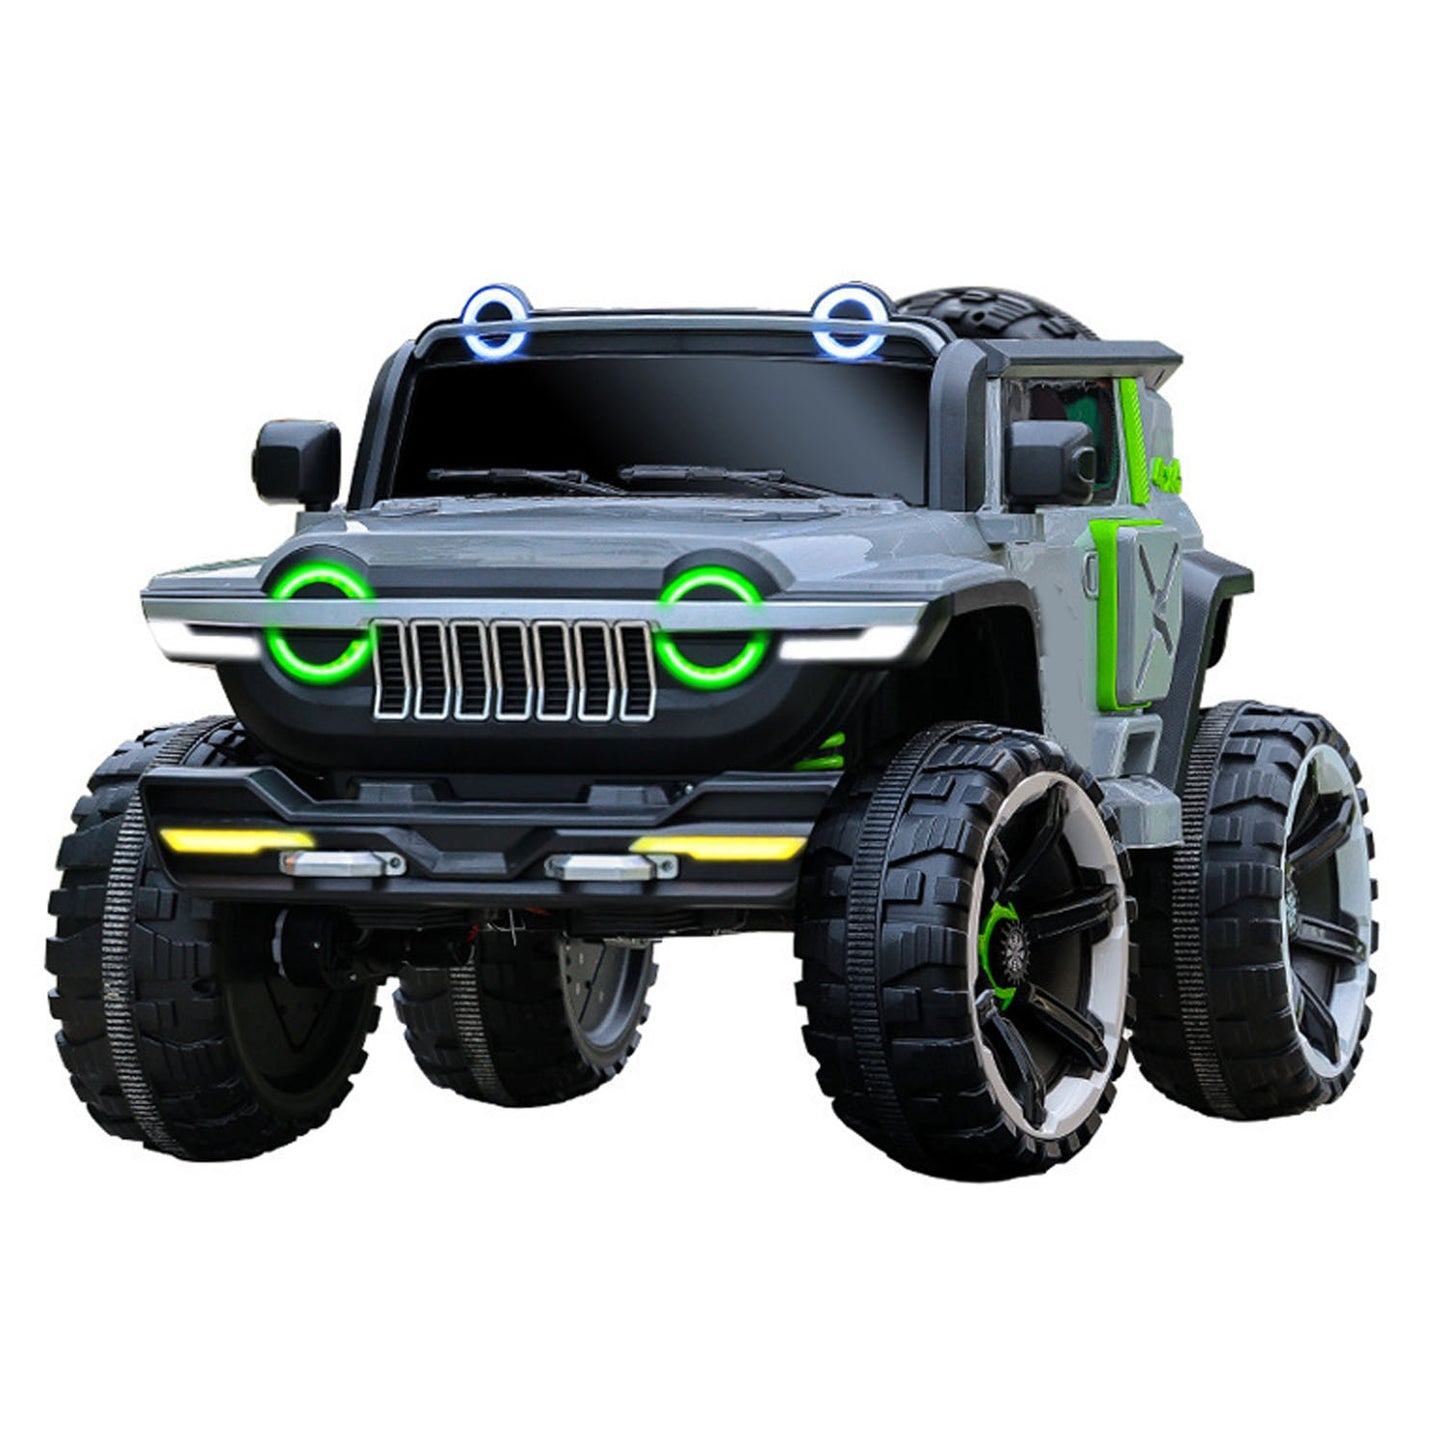 Fliptoy® | kids ride on jeep | Four Wheel drive ride ons (4*4)| Big size toy car FLPM-12098